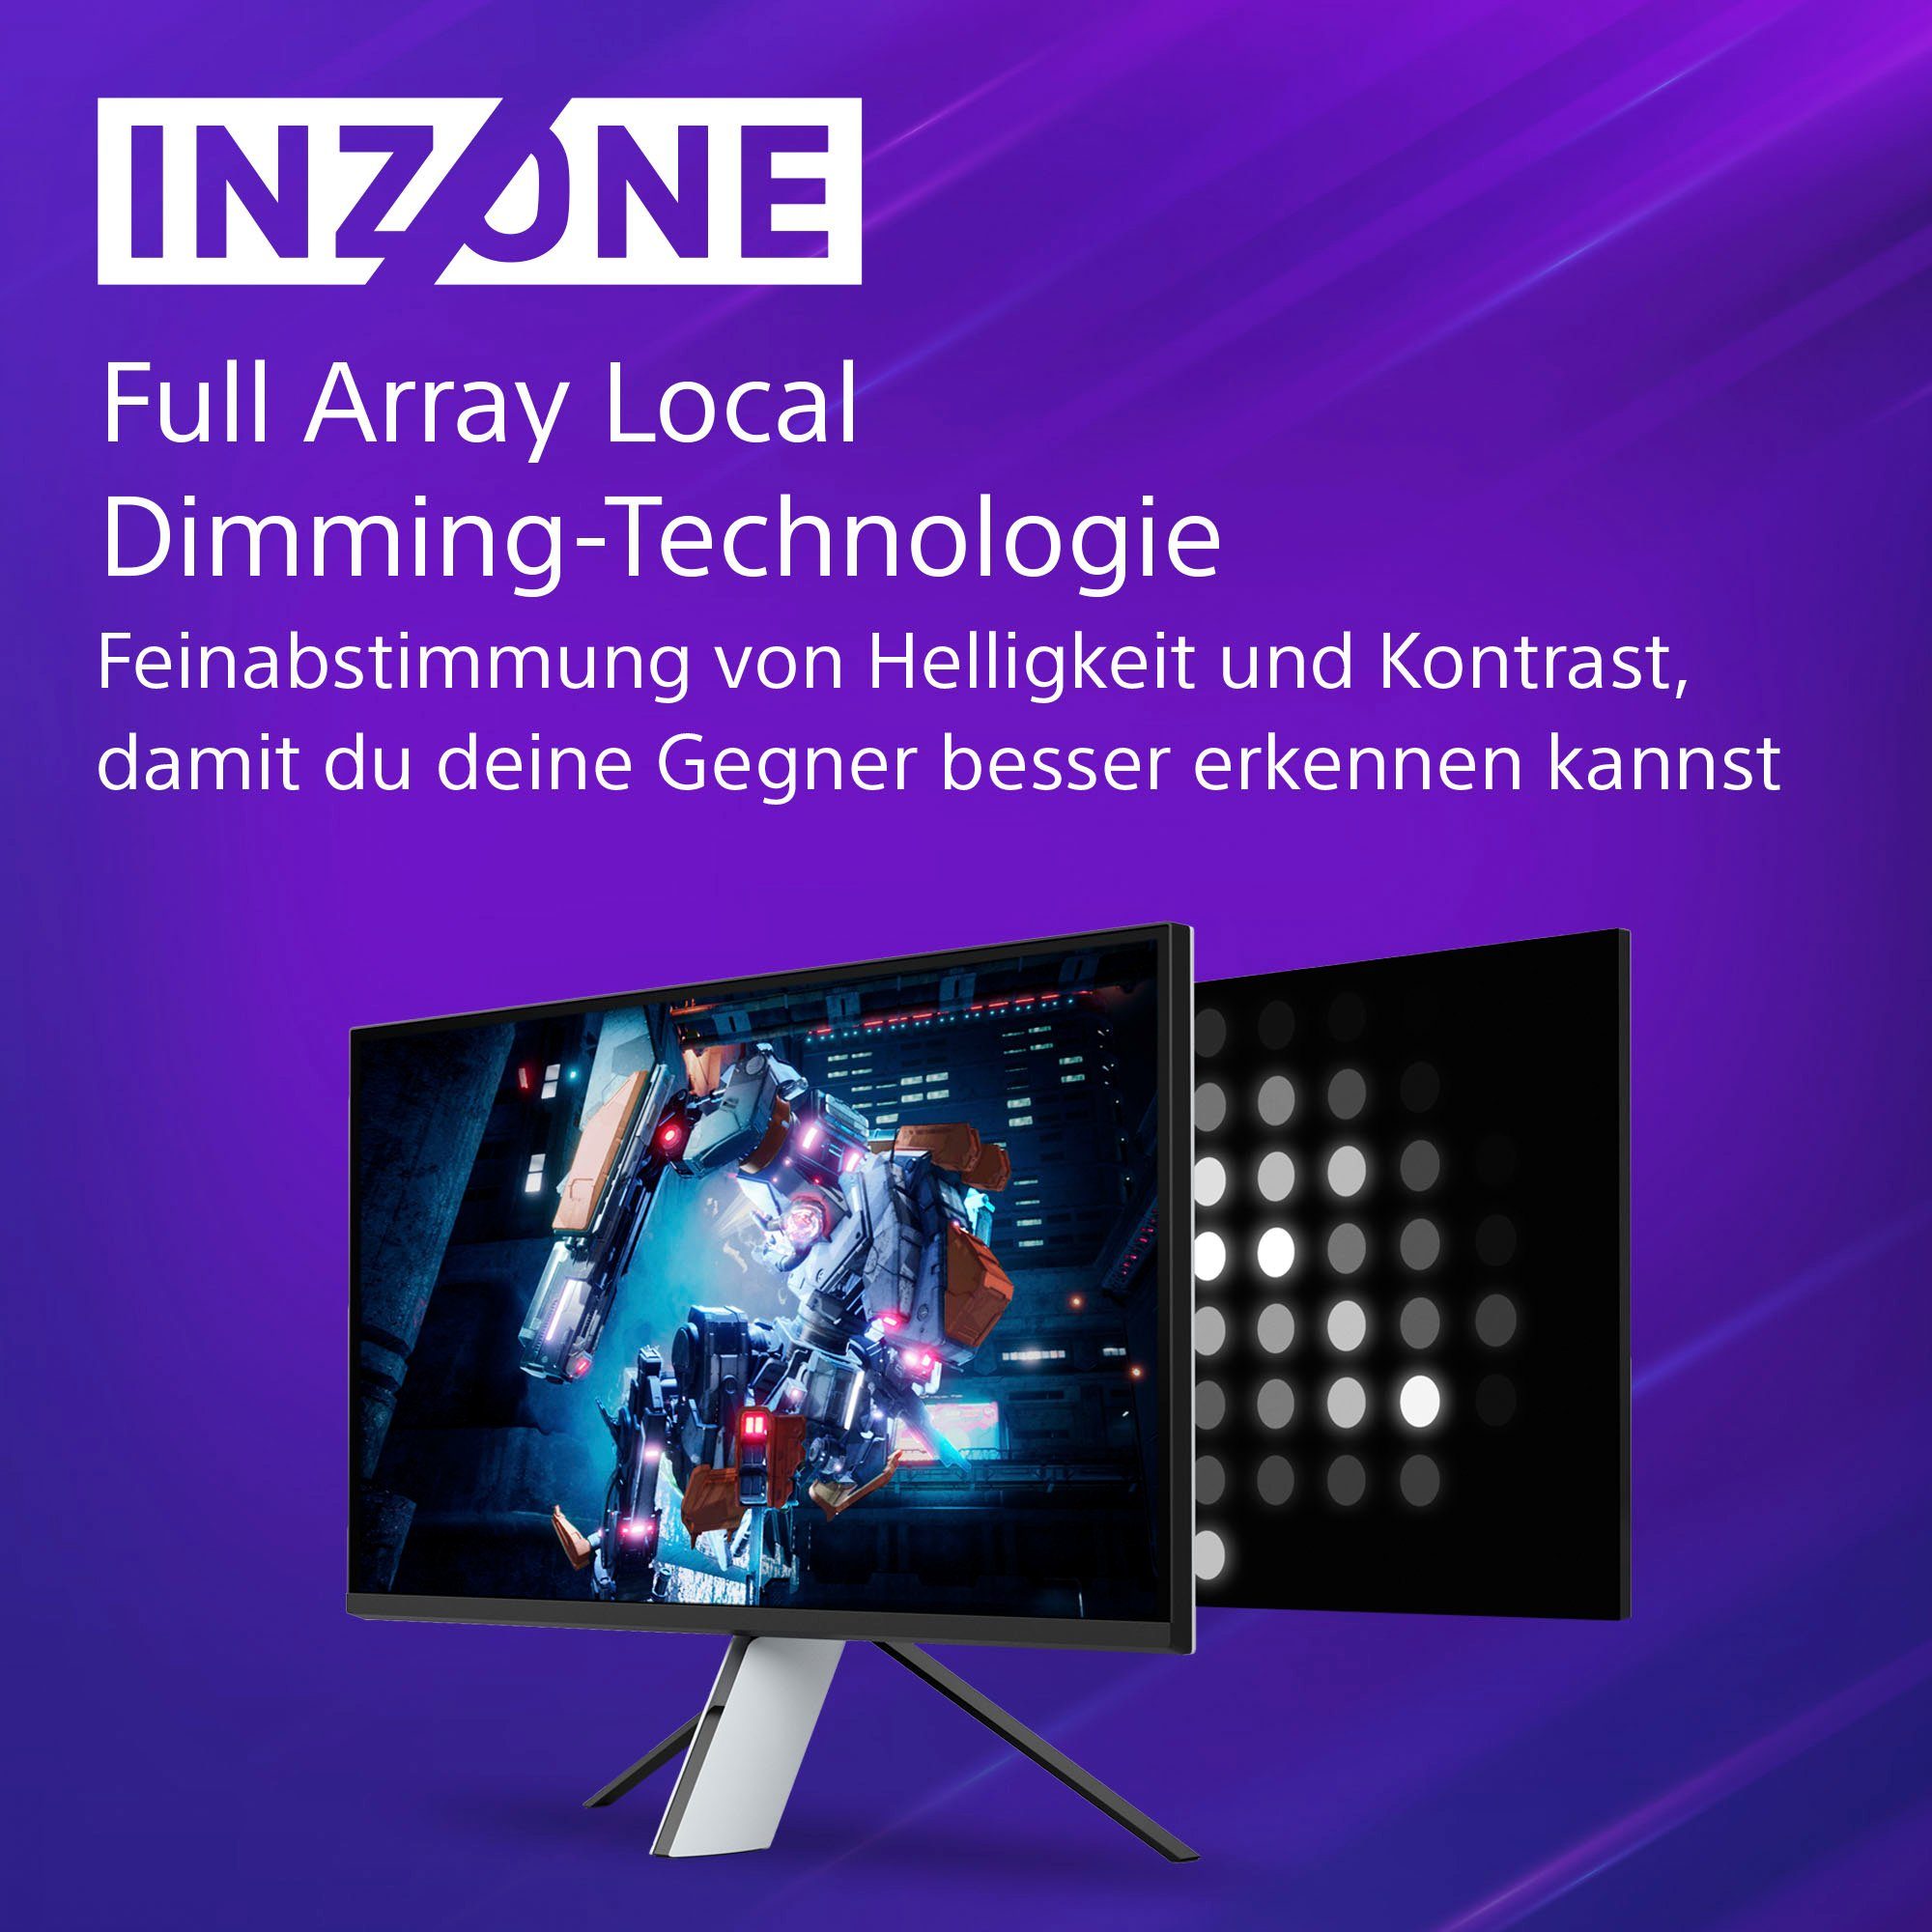 Hz, Sony 3840 HD, M9 2160 ", INZONE px, ms (68 Perfekt für Ultra PlayStation®5) cm/27 1 144 Reaktionszeit, IPS-LED, Gaming-Monitor 4K x